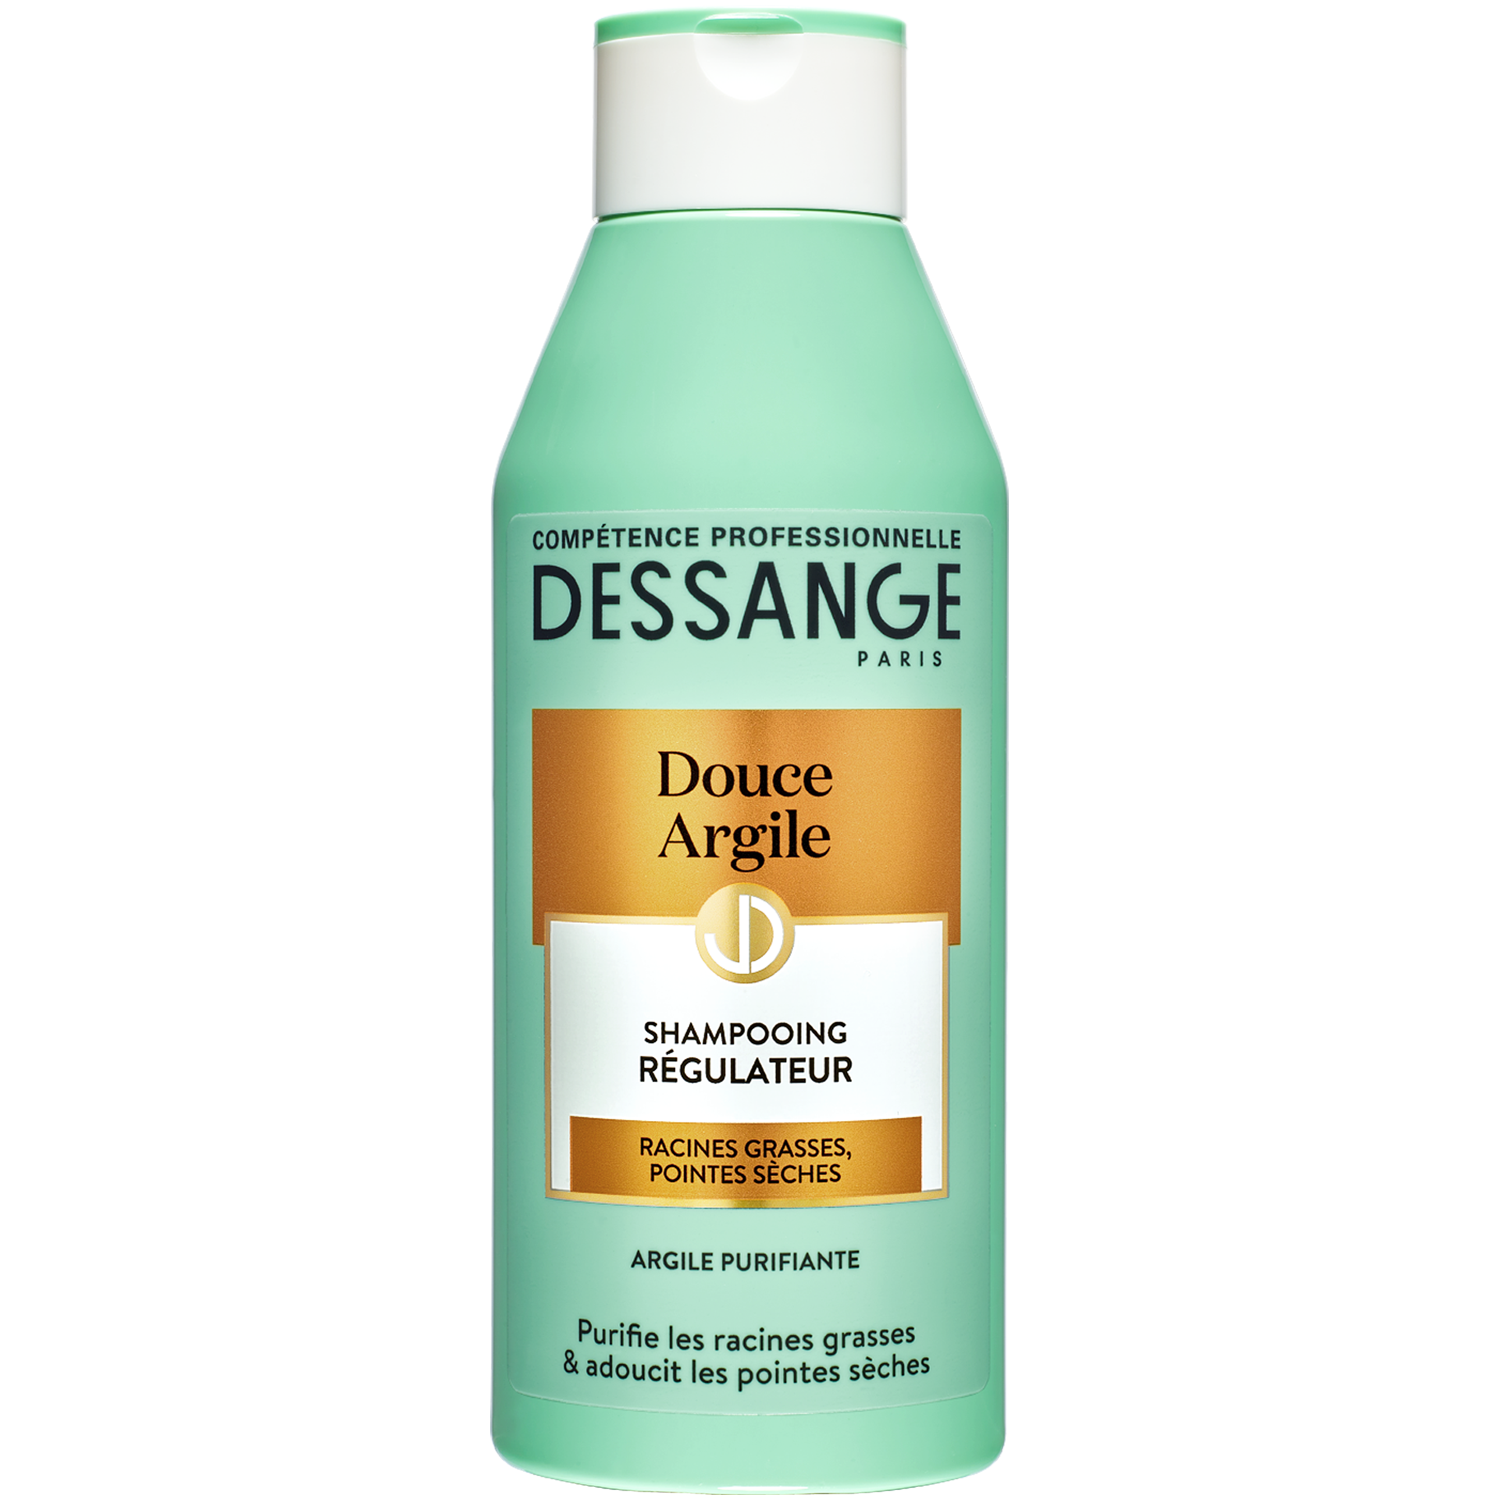 Dessange Professional Hair Luxury Douce Argile szampon do włosów, 250 ml |  hebe.pl